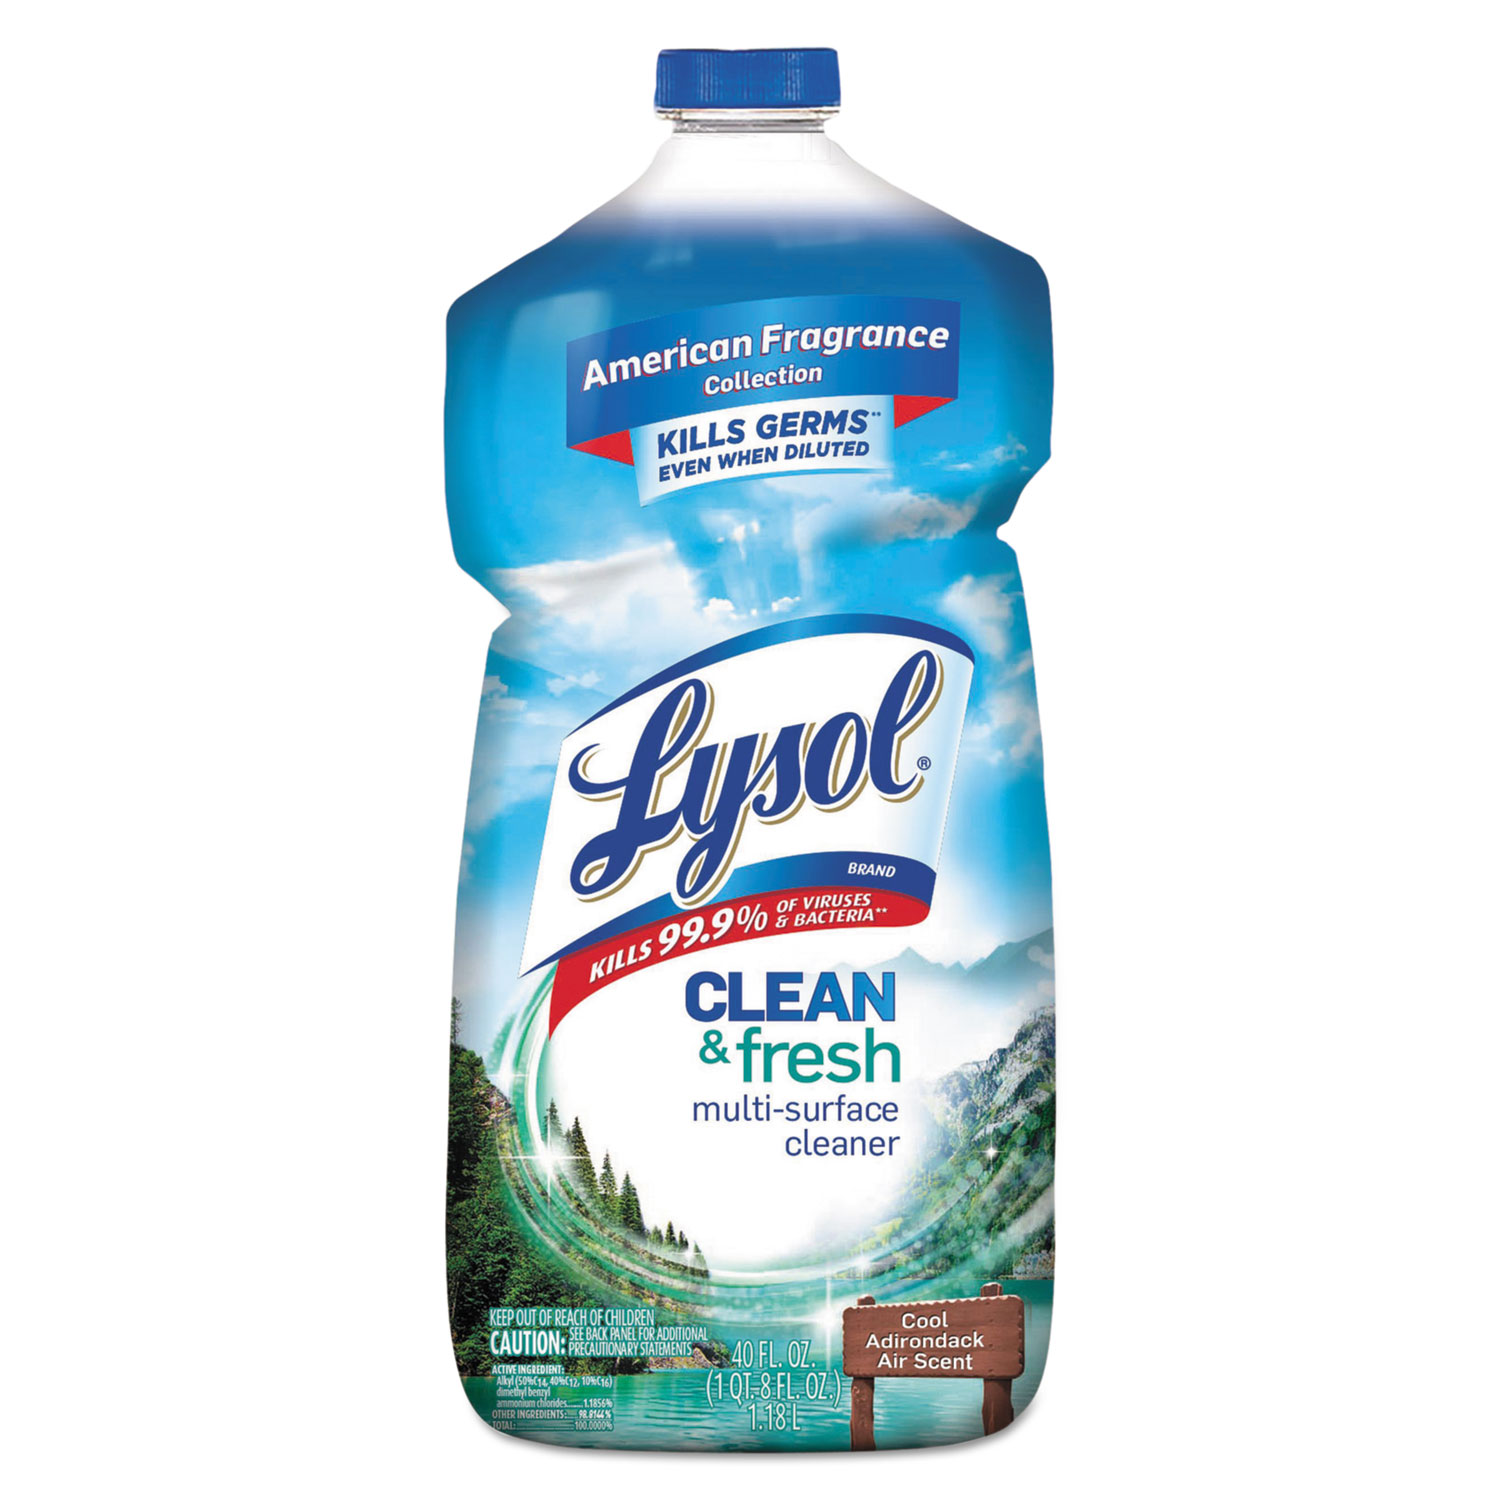 Clean & Fresh Multi-Surface Cleaner, Cool Adirondack Air, 40 oz Bottle